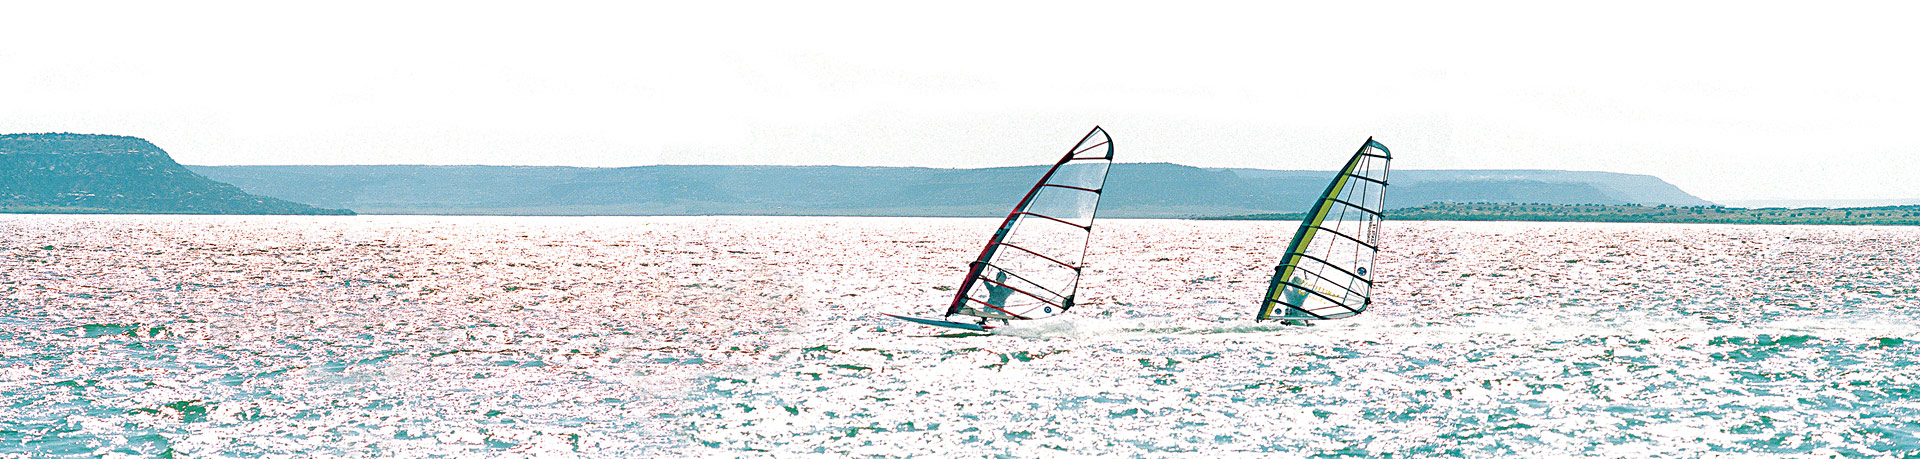 american_windsurfer-4.3-need_for_speed_sailing-team